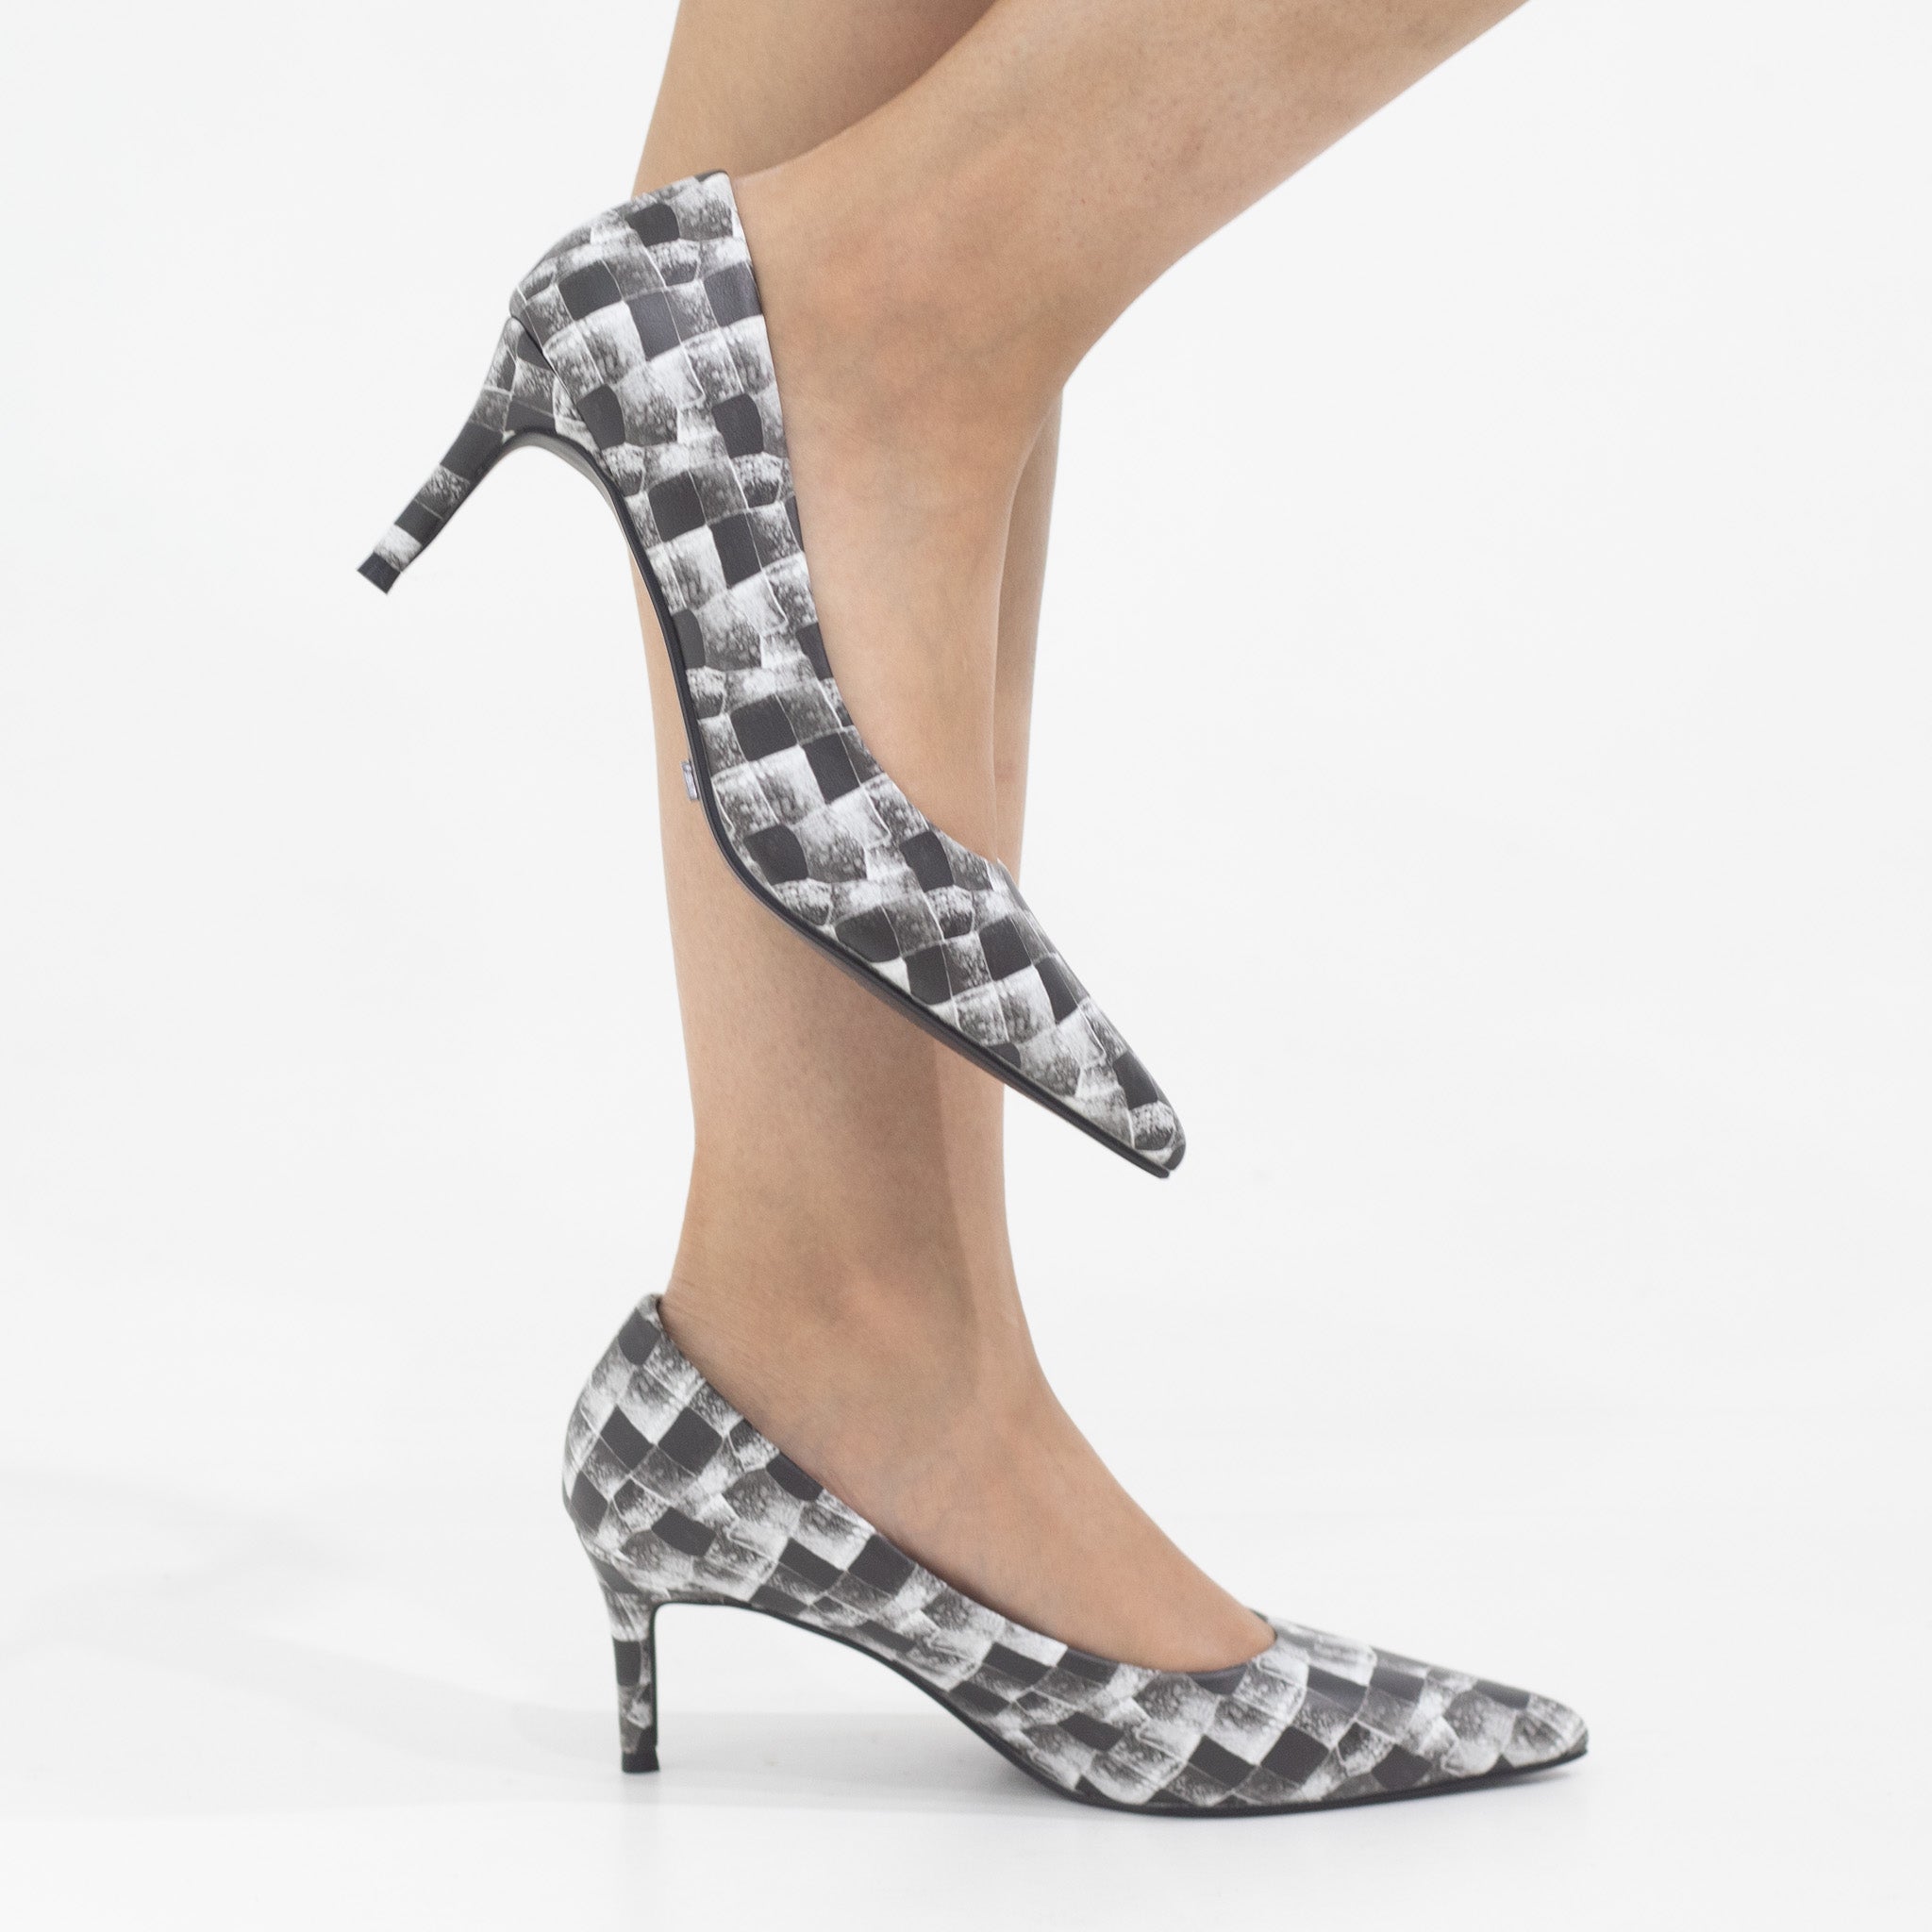 Black 7cm heel  multi colored pointy court banu